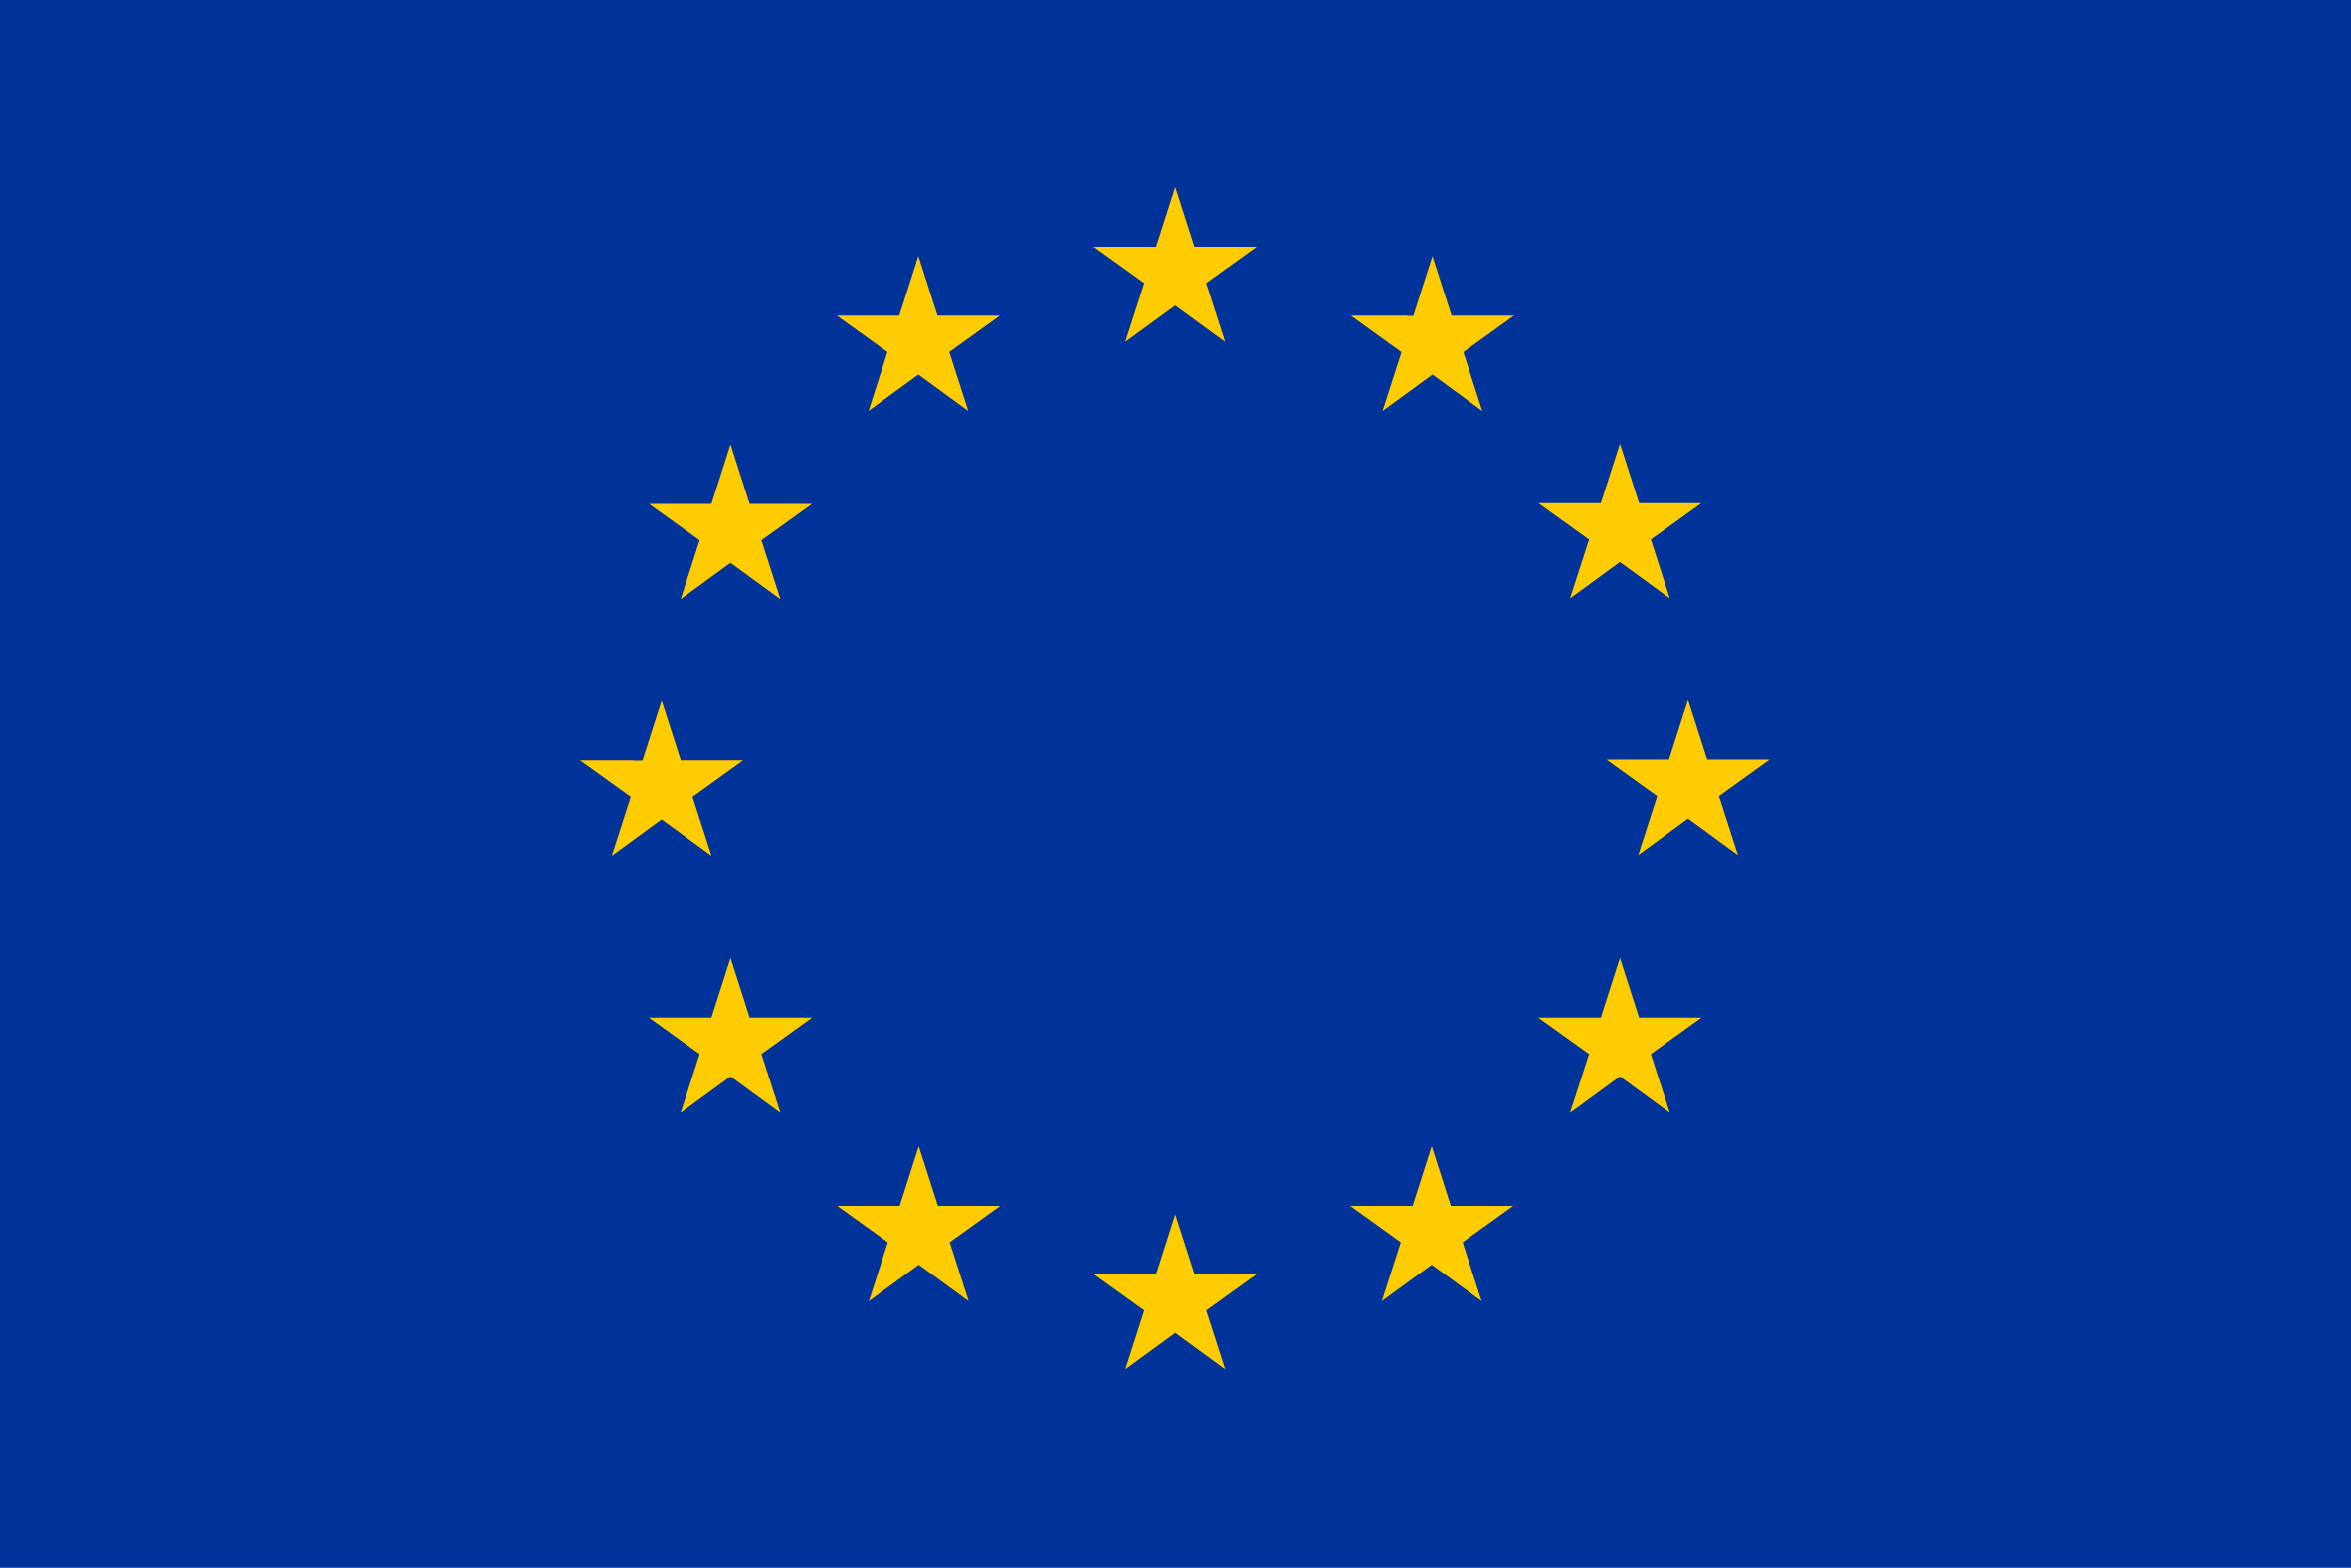 EU Flag with 12 yellow stars